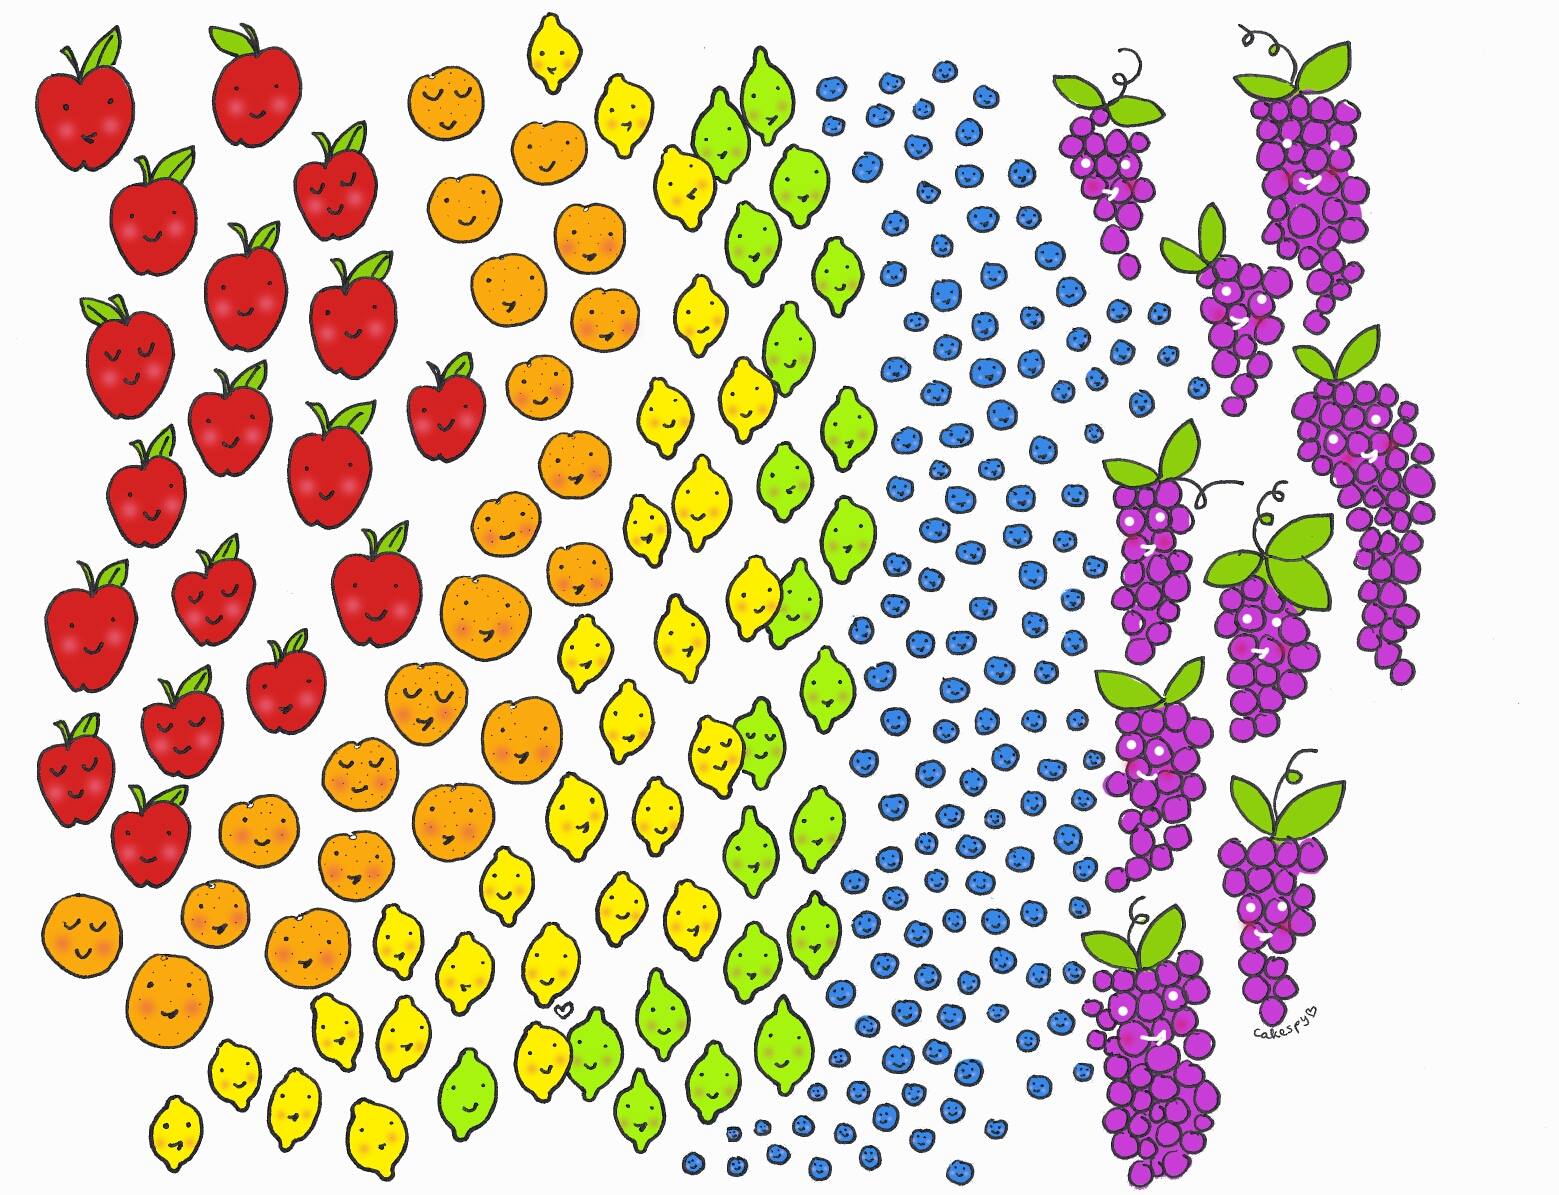 A rainbow of fruits